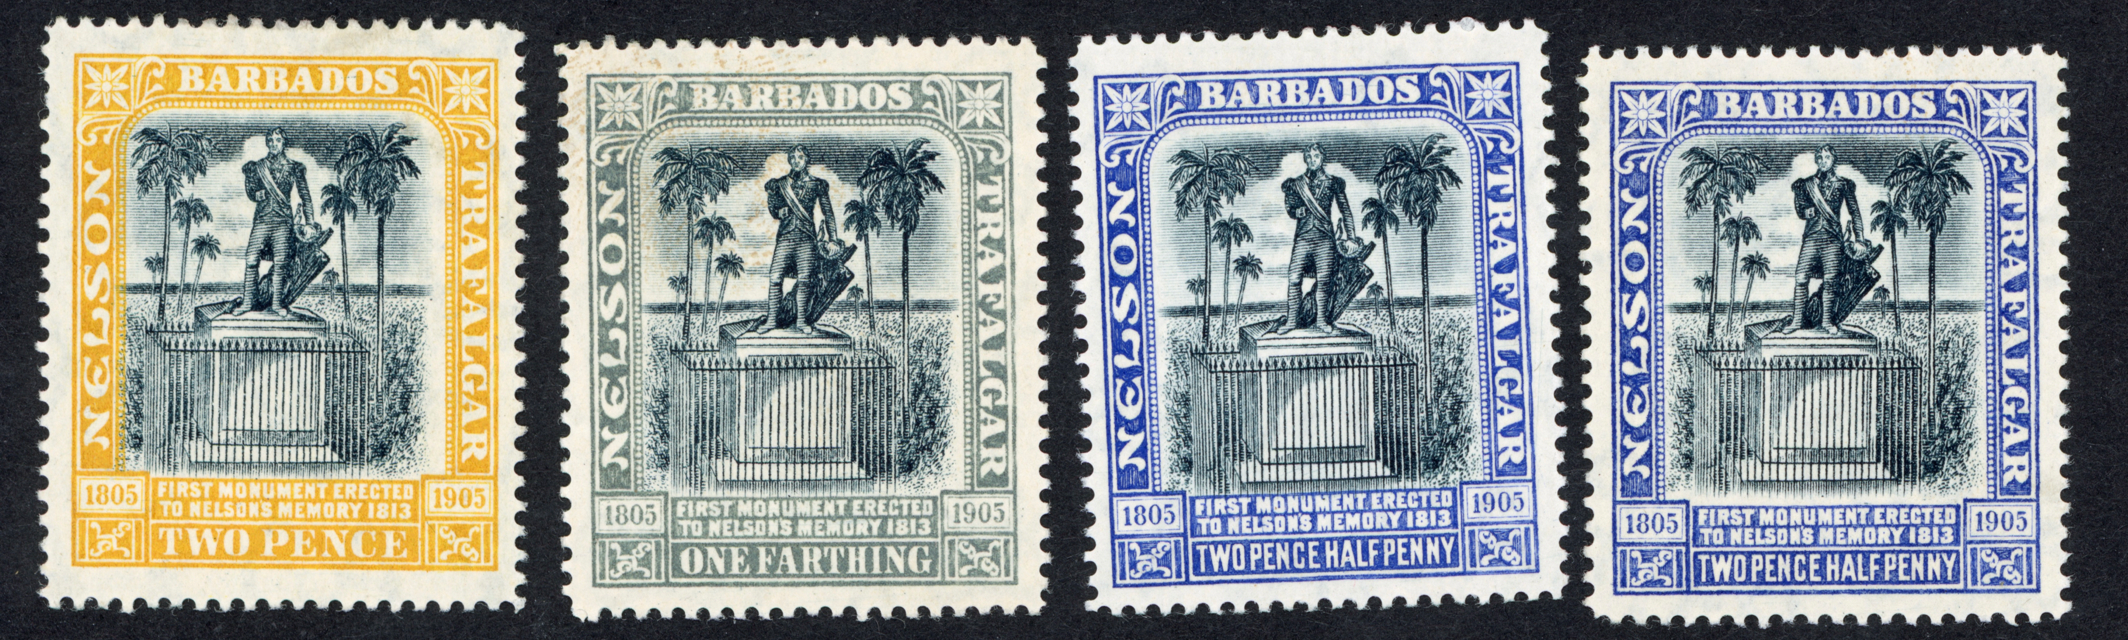 Barbados 1907 Nelson Centenary set of 4, watermark MCA, including scarce 2½d in black and indigo (SG162a), SG158/162a.